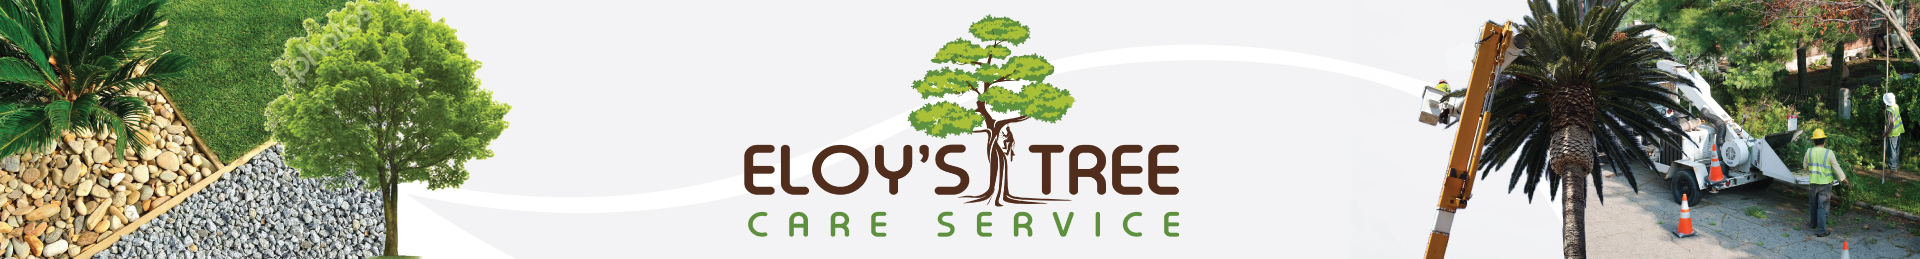 Header - Eloy's Tree Care Service